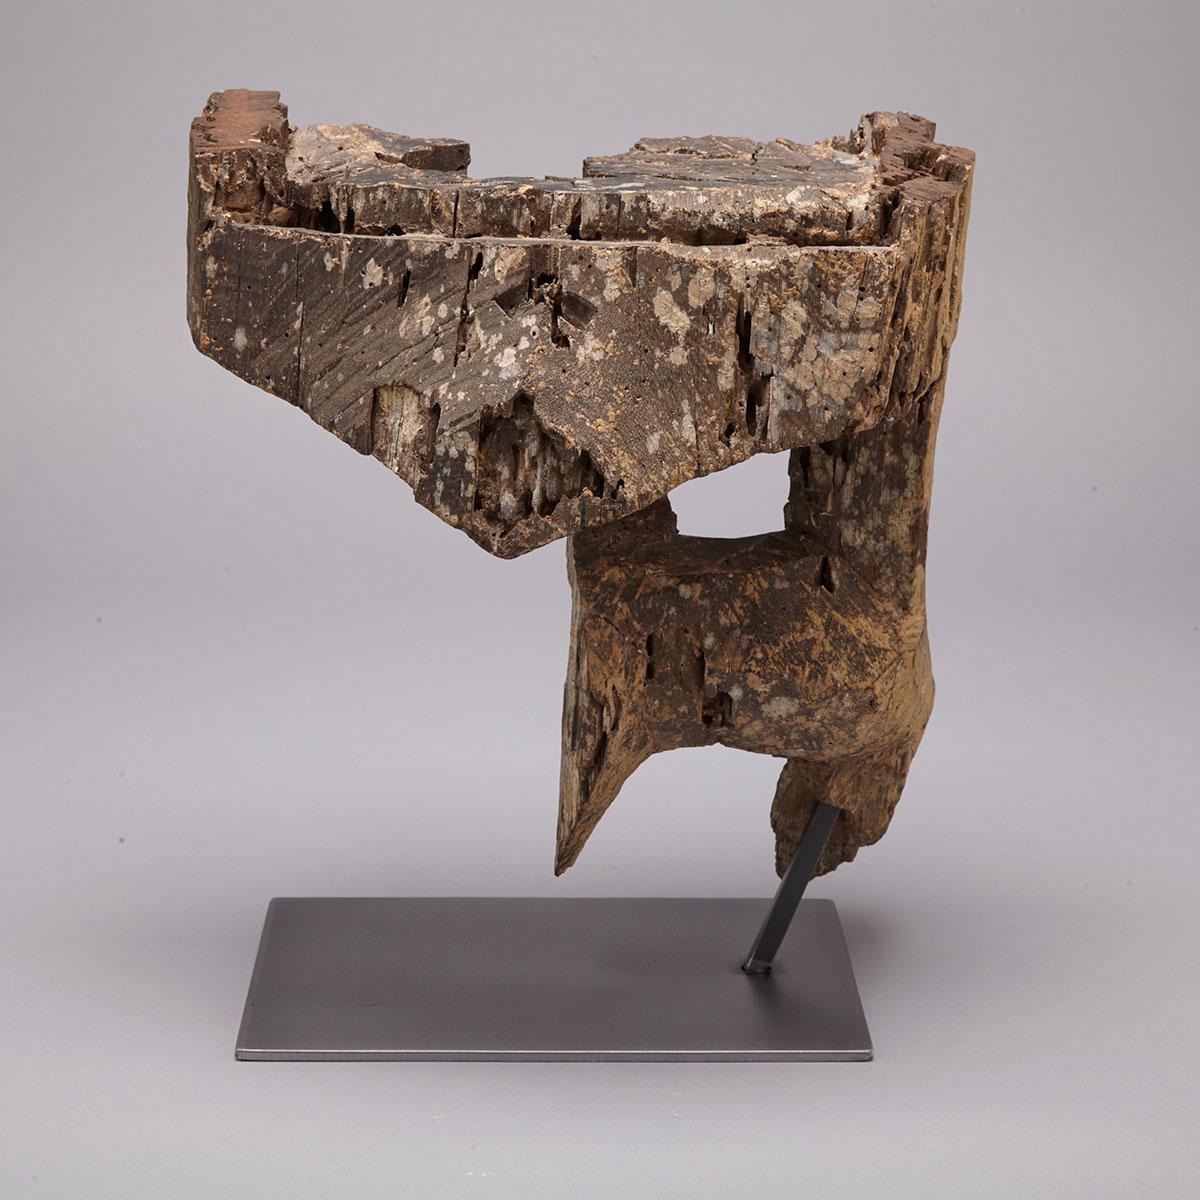 Borneo Bahau or Mondang Dayak Sarcophagus Mask Fragment, c.900 A.D.